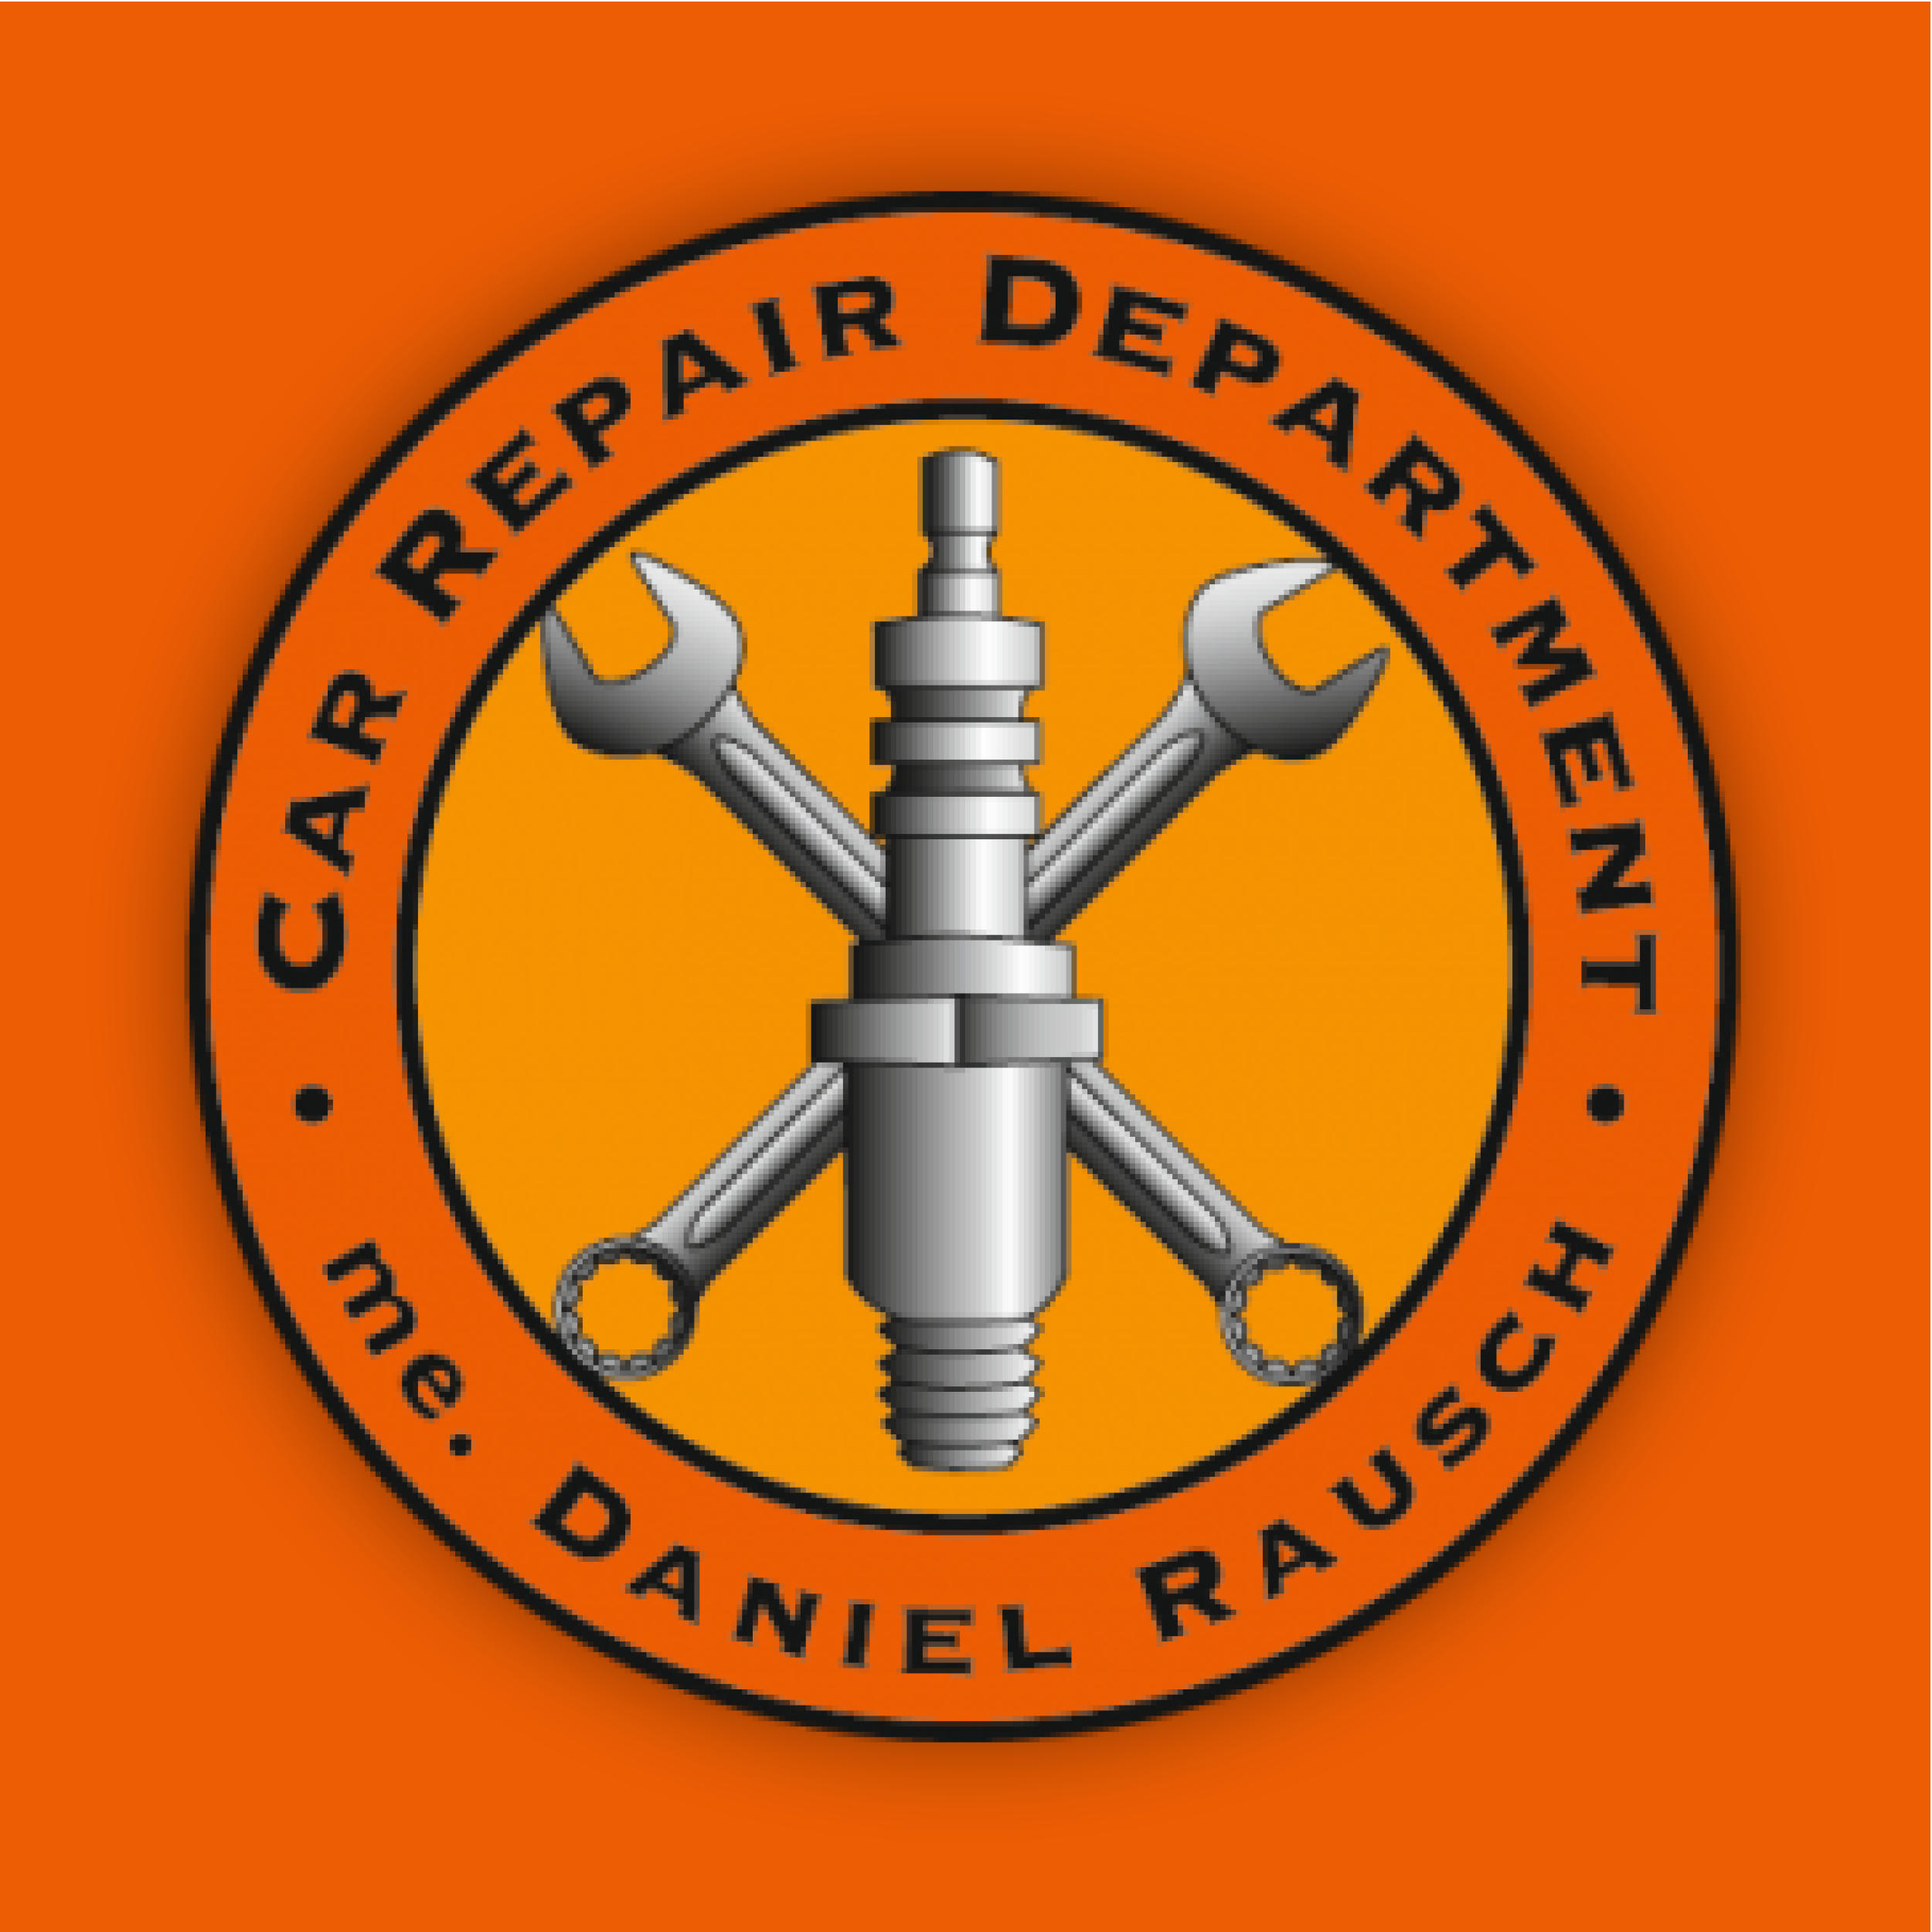 Car Repair Department/ me.Daniel Rausch  